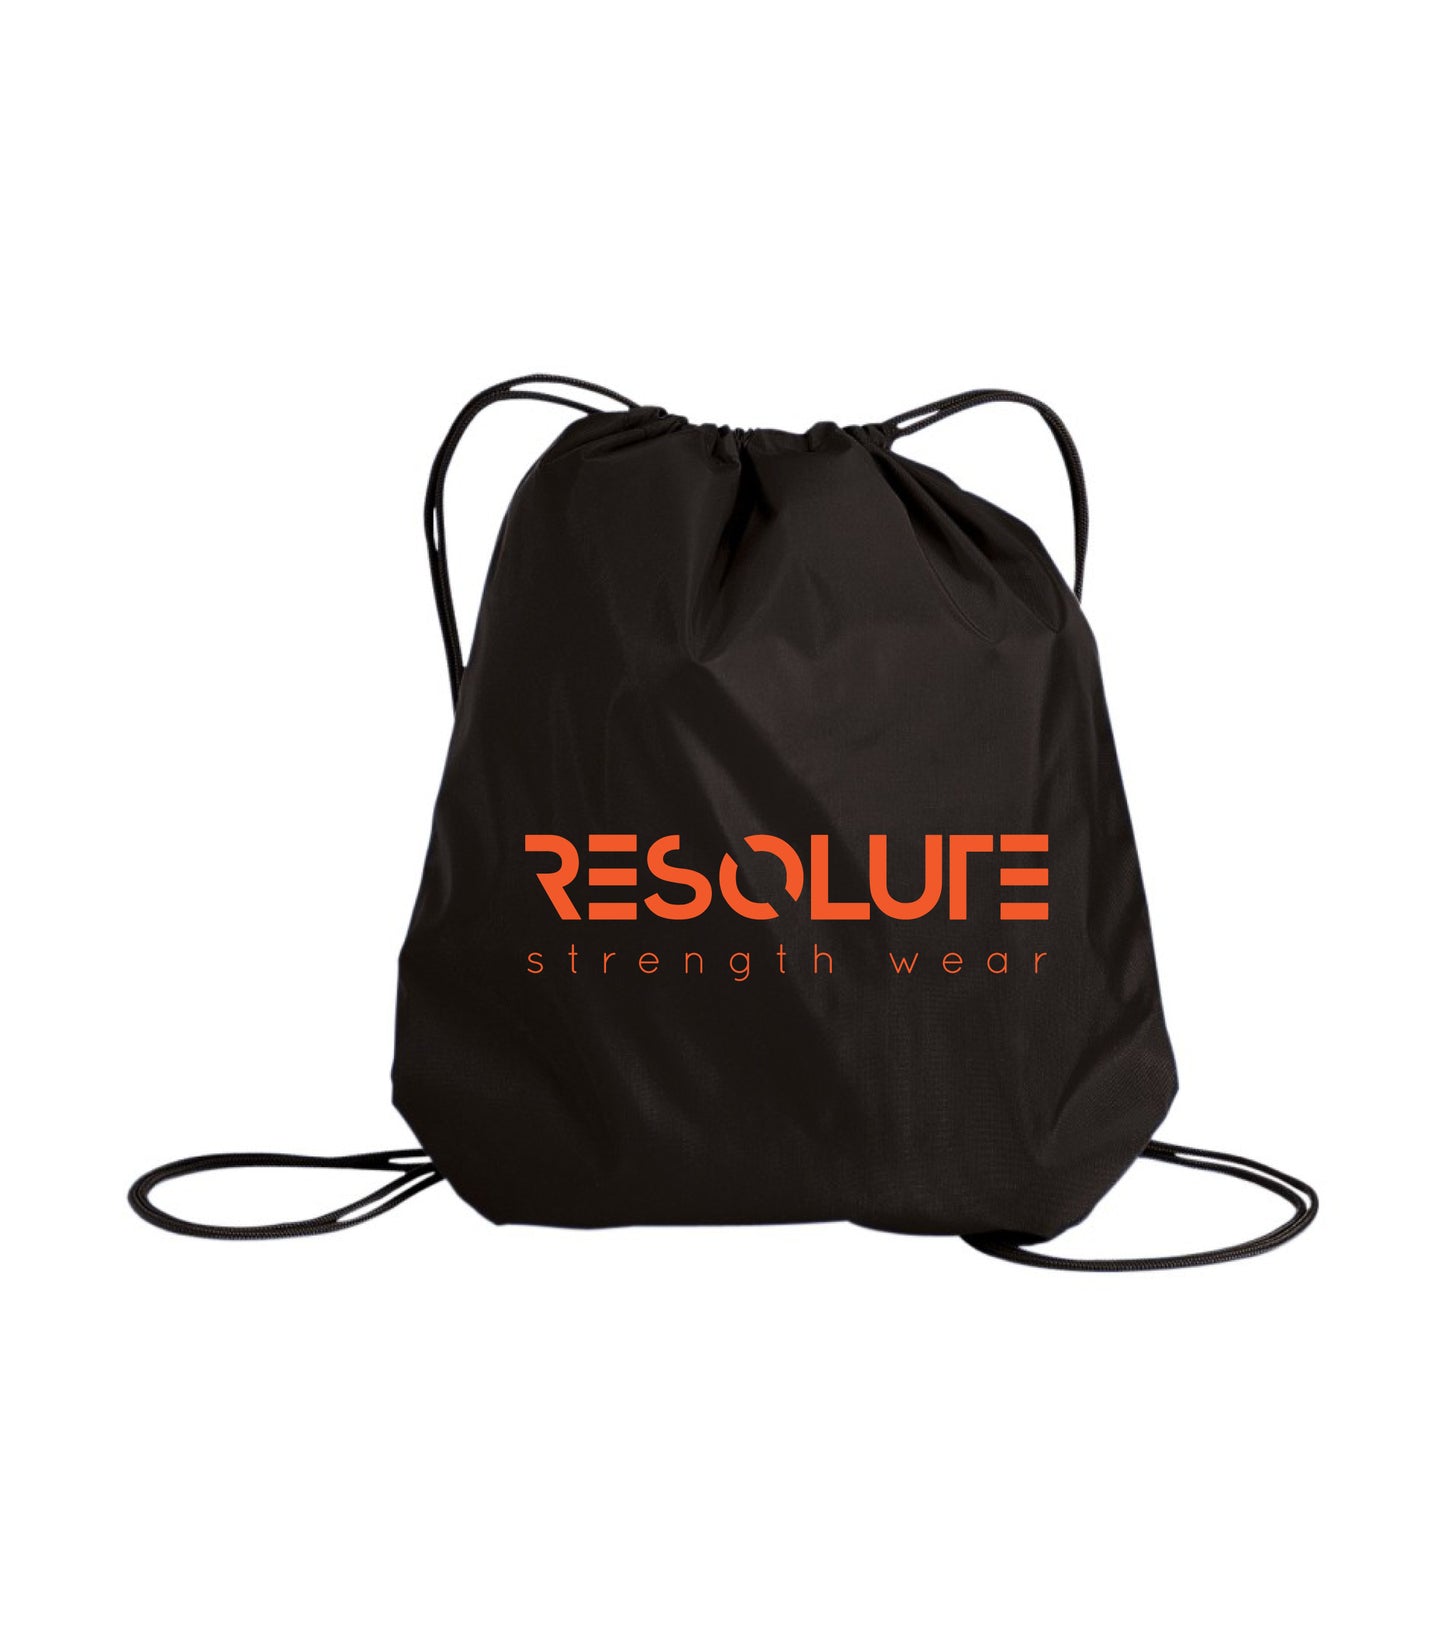 Resolute Drawstring gym bag - Resolute Strength Wear